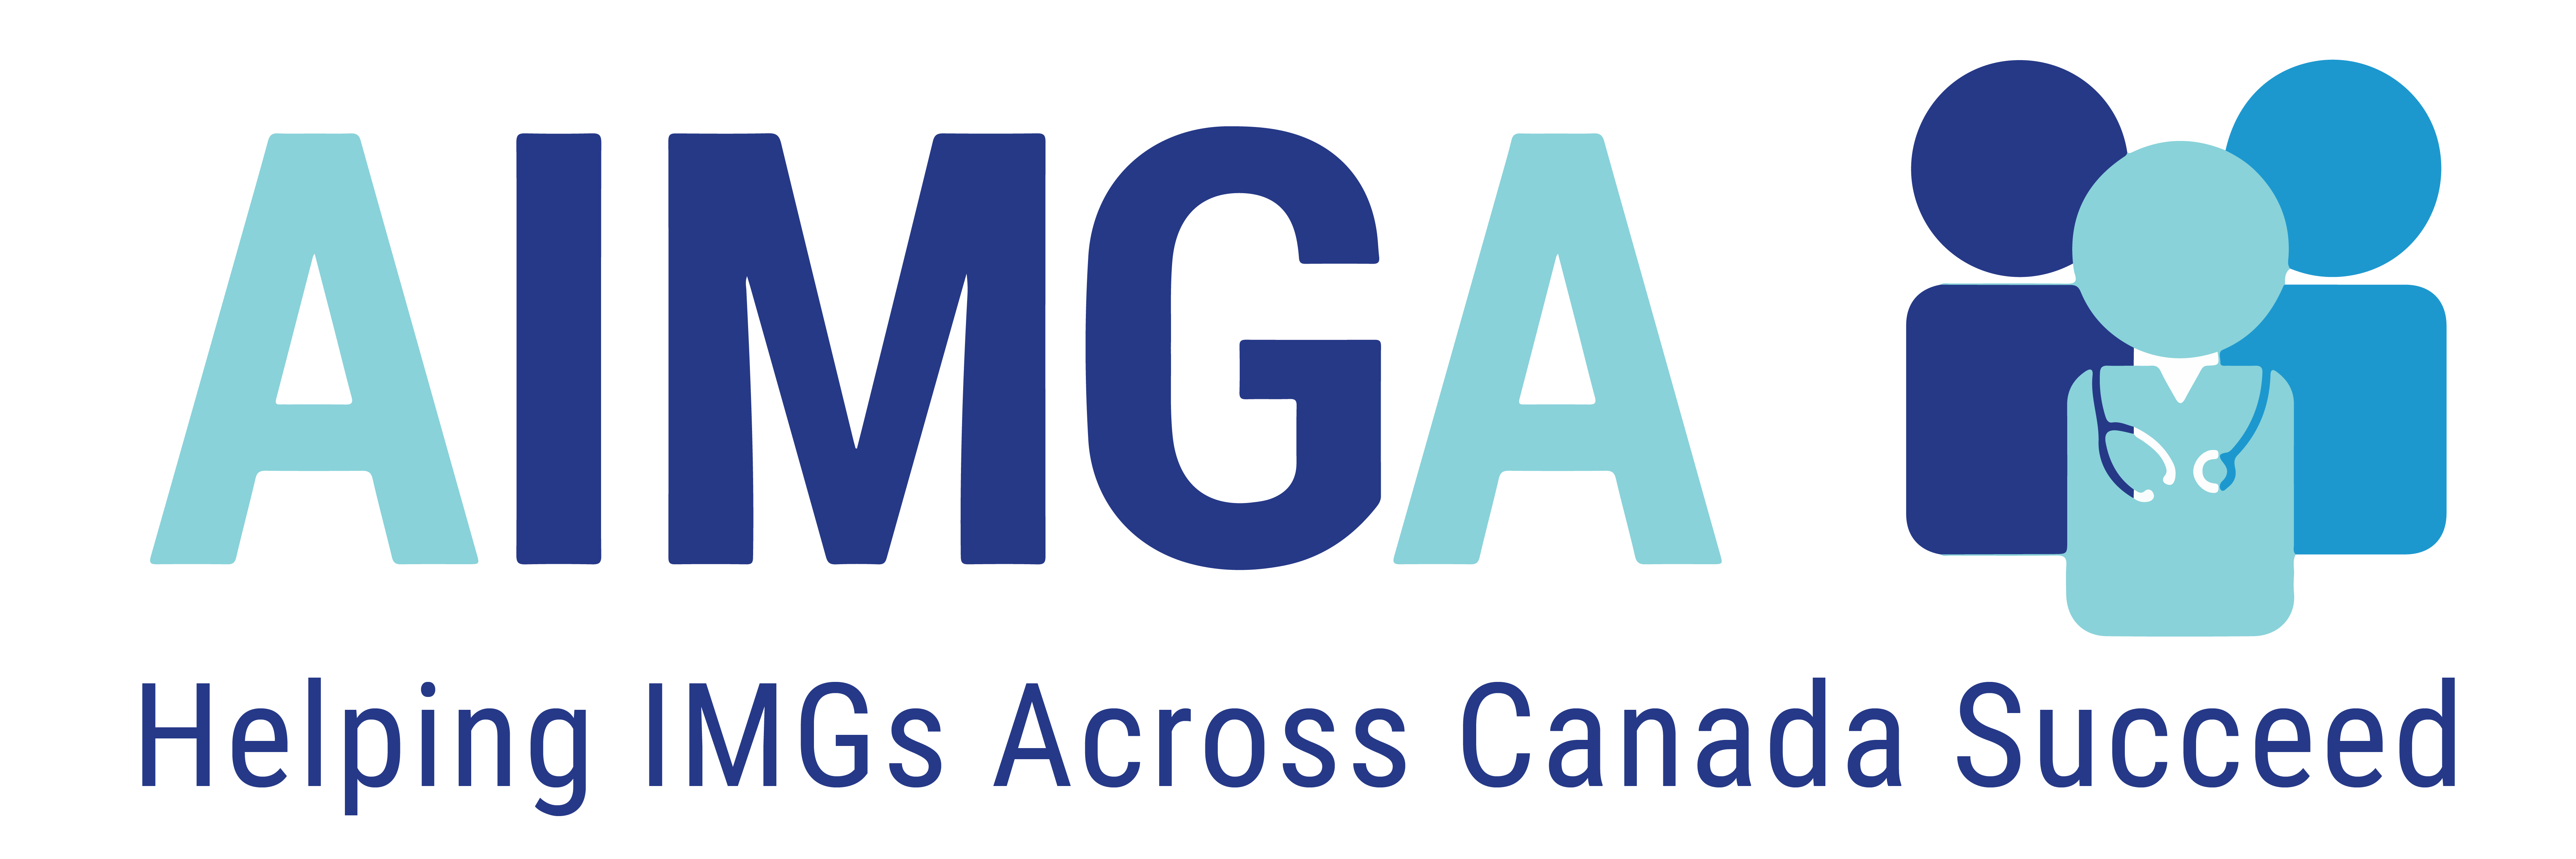 Logo that reads: "AIMGA: Helping IMGs Across Canada Succeed"